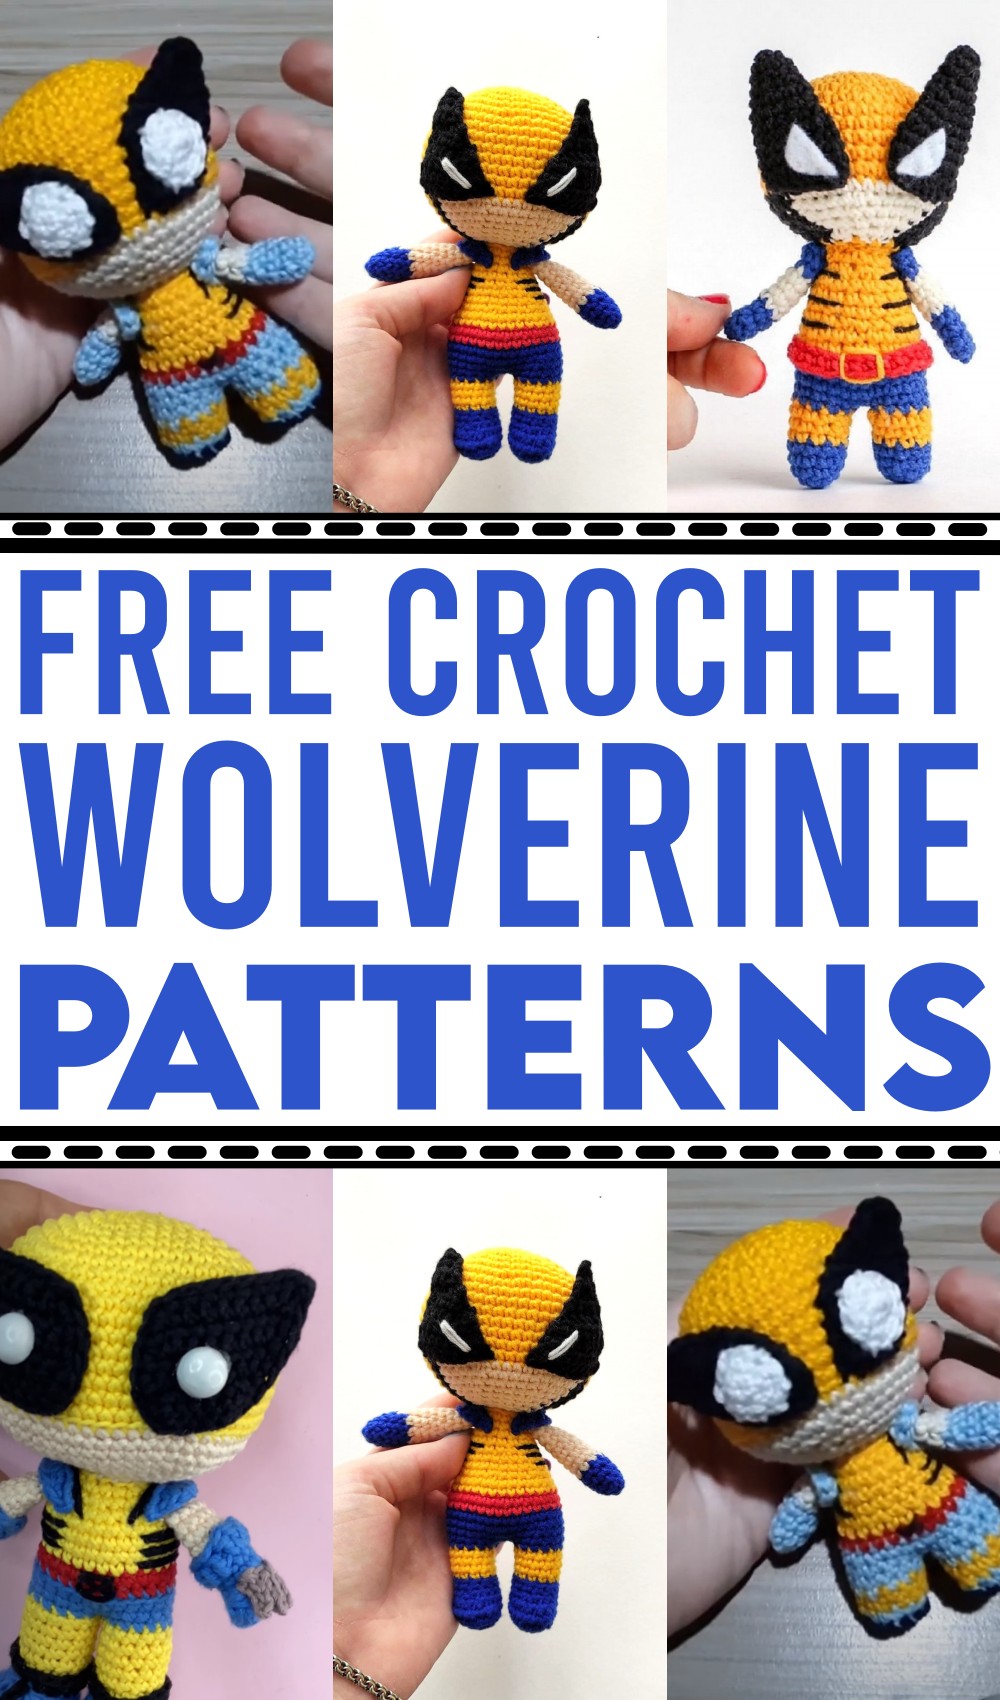 Crochet Wolverine Patterns